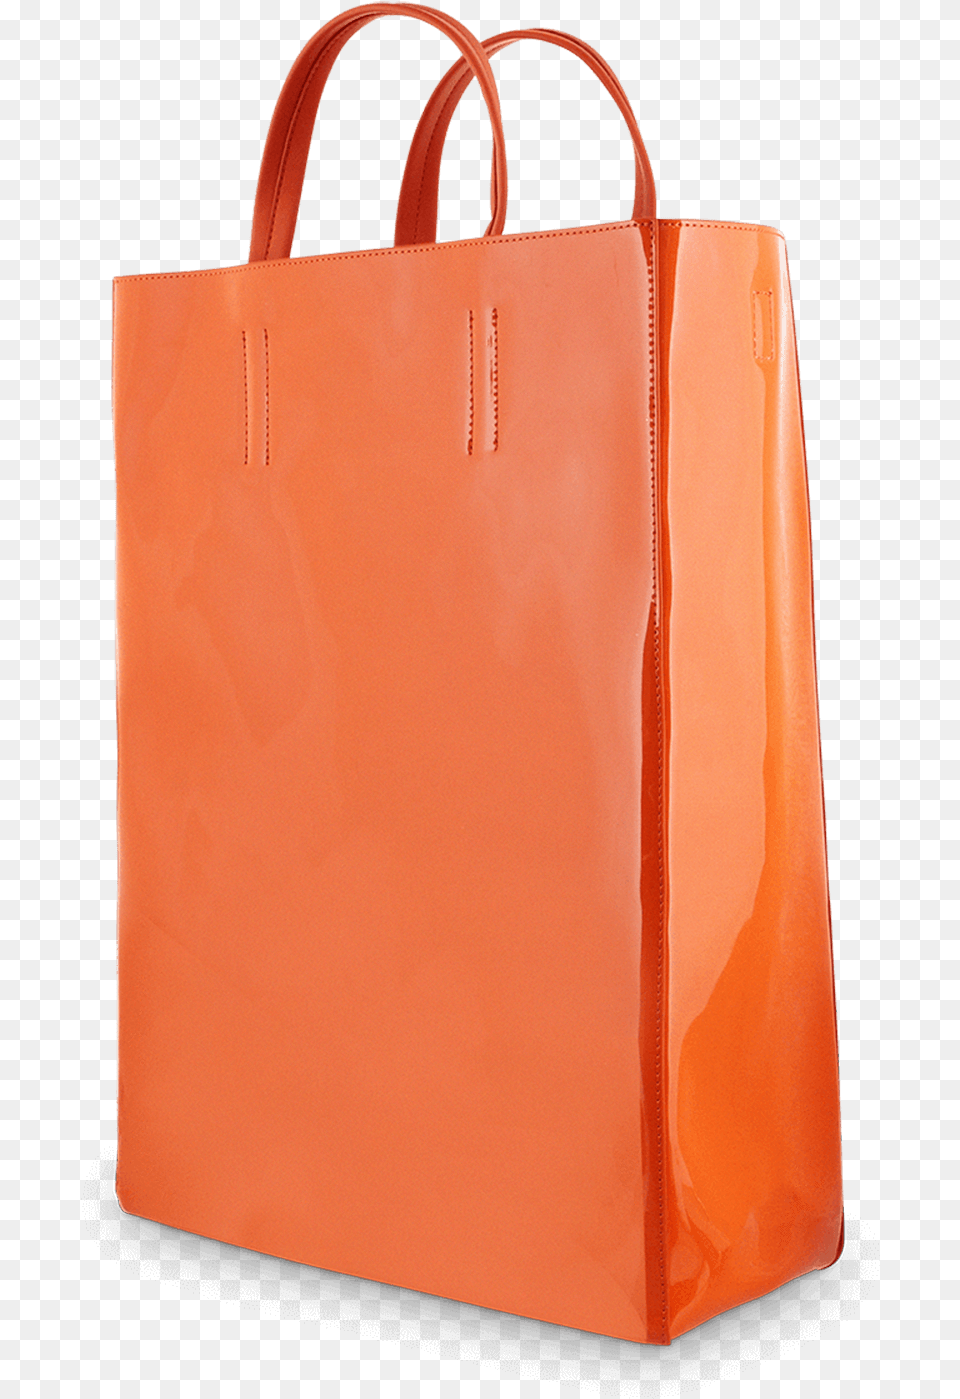 Bonnie Burnt Orange Patent Side Tote Bag, Accessories, Handbag, Tote Bag, Shopping Bag Free Transparent Png